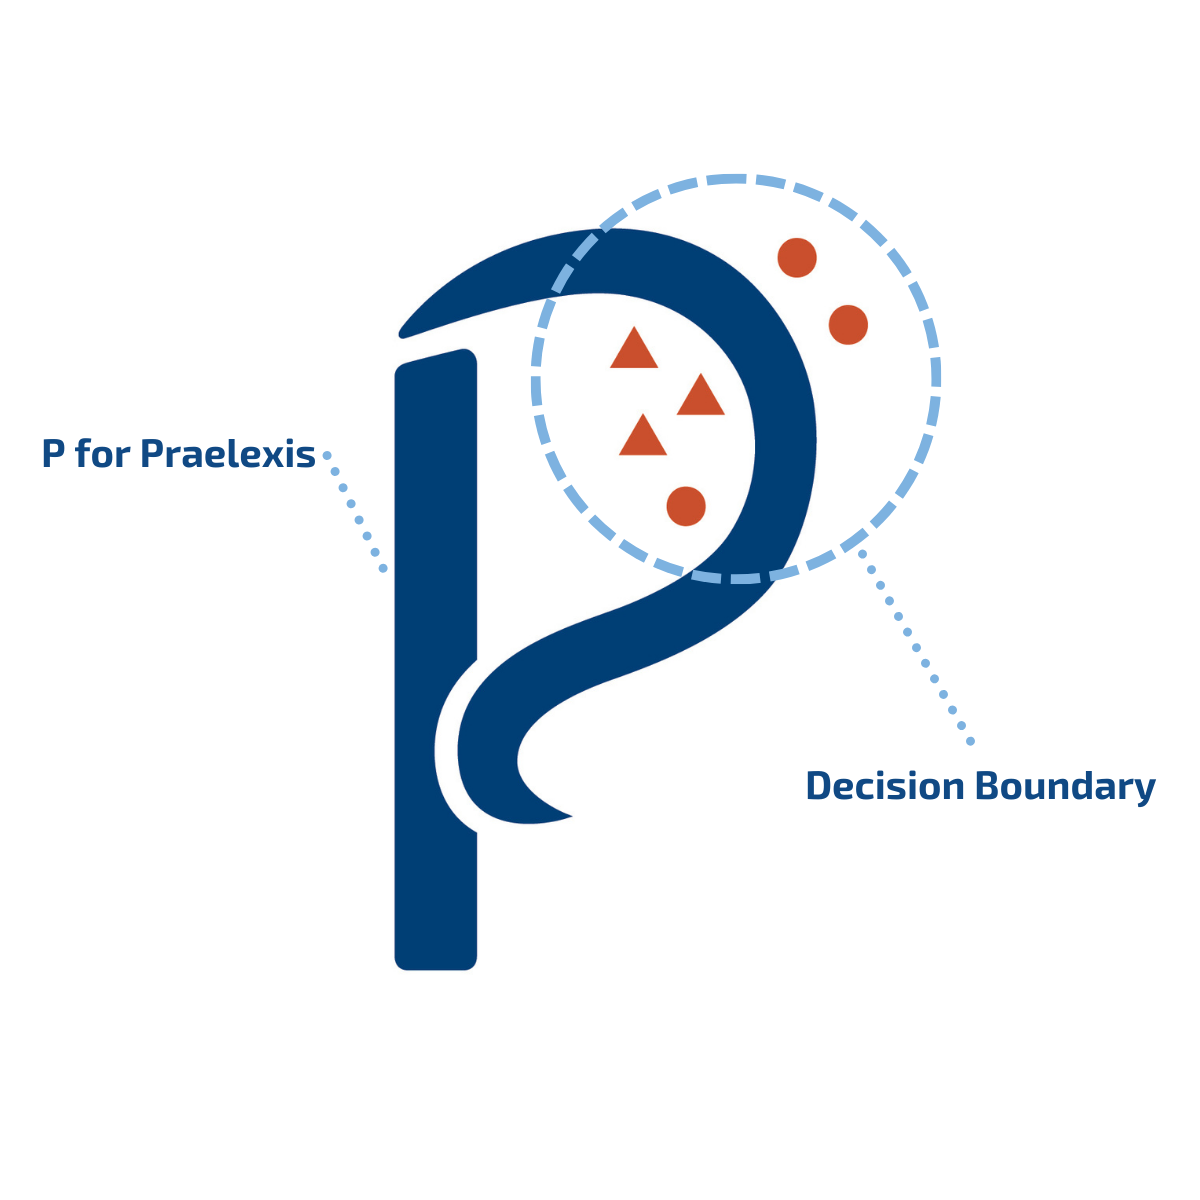 Image depicting how the Praelexis "P" shows decision boundary